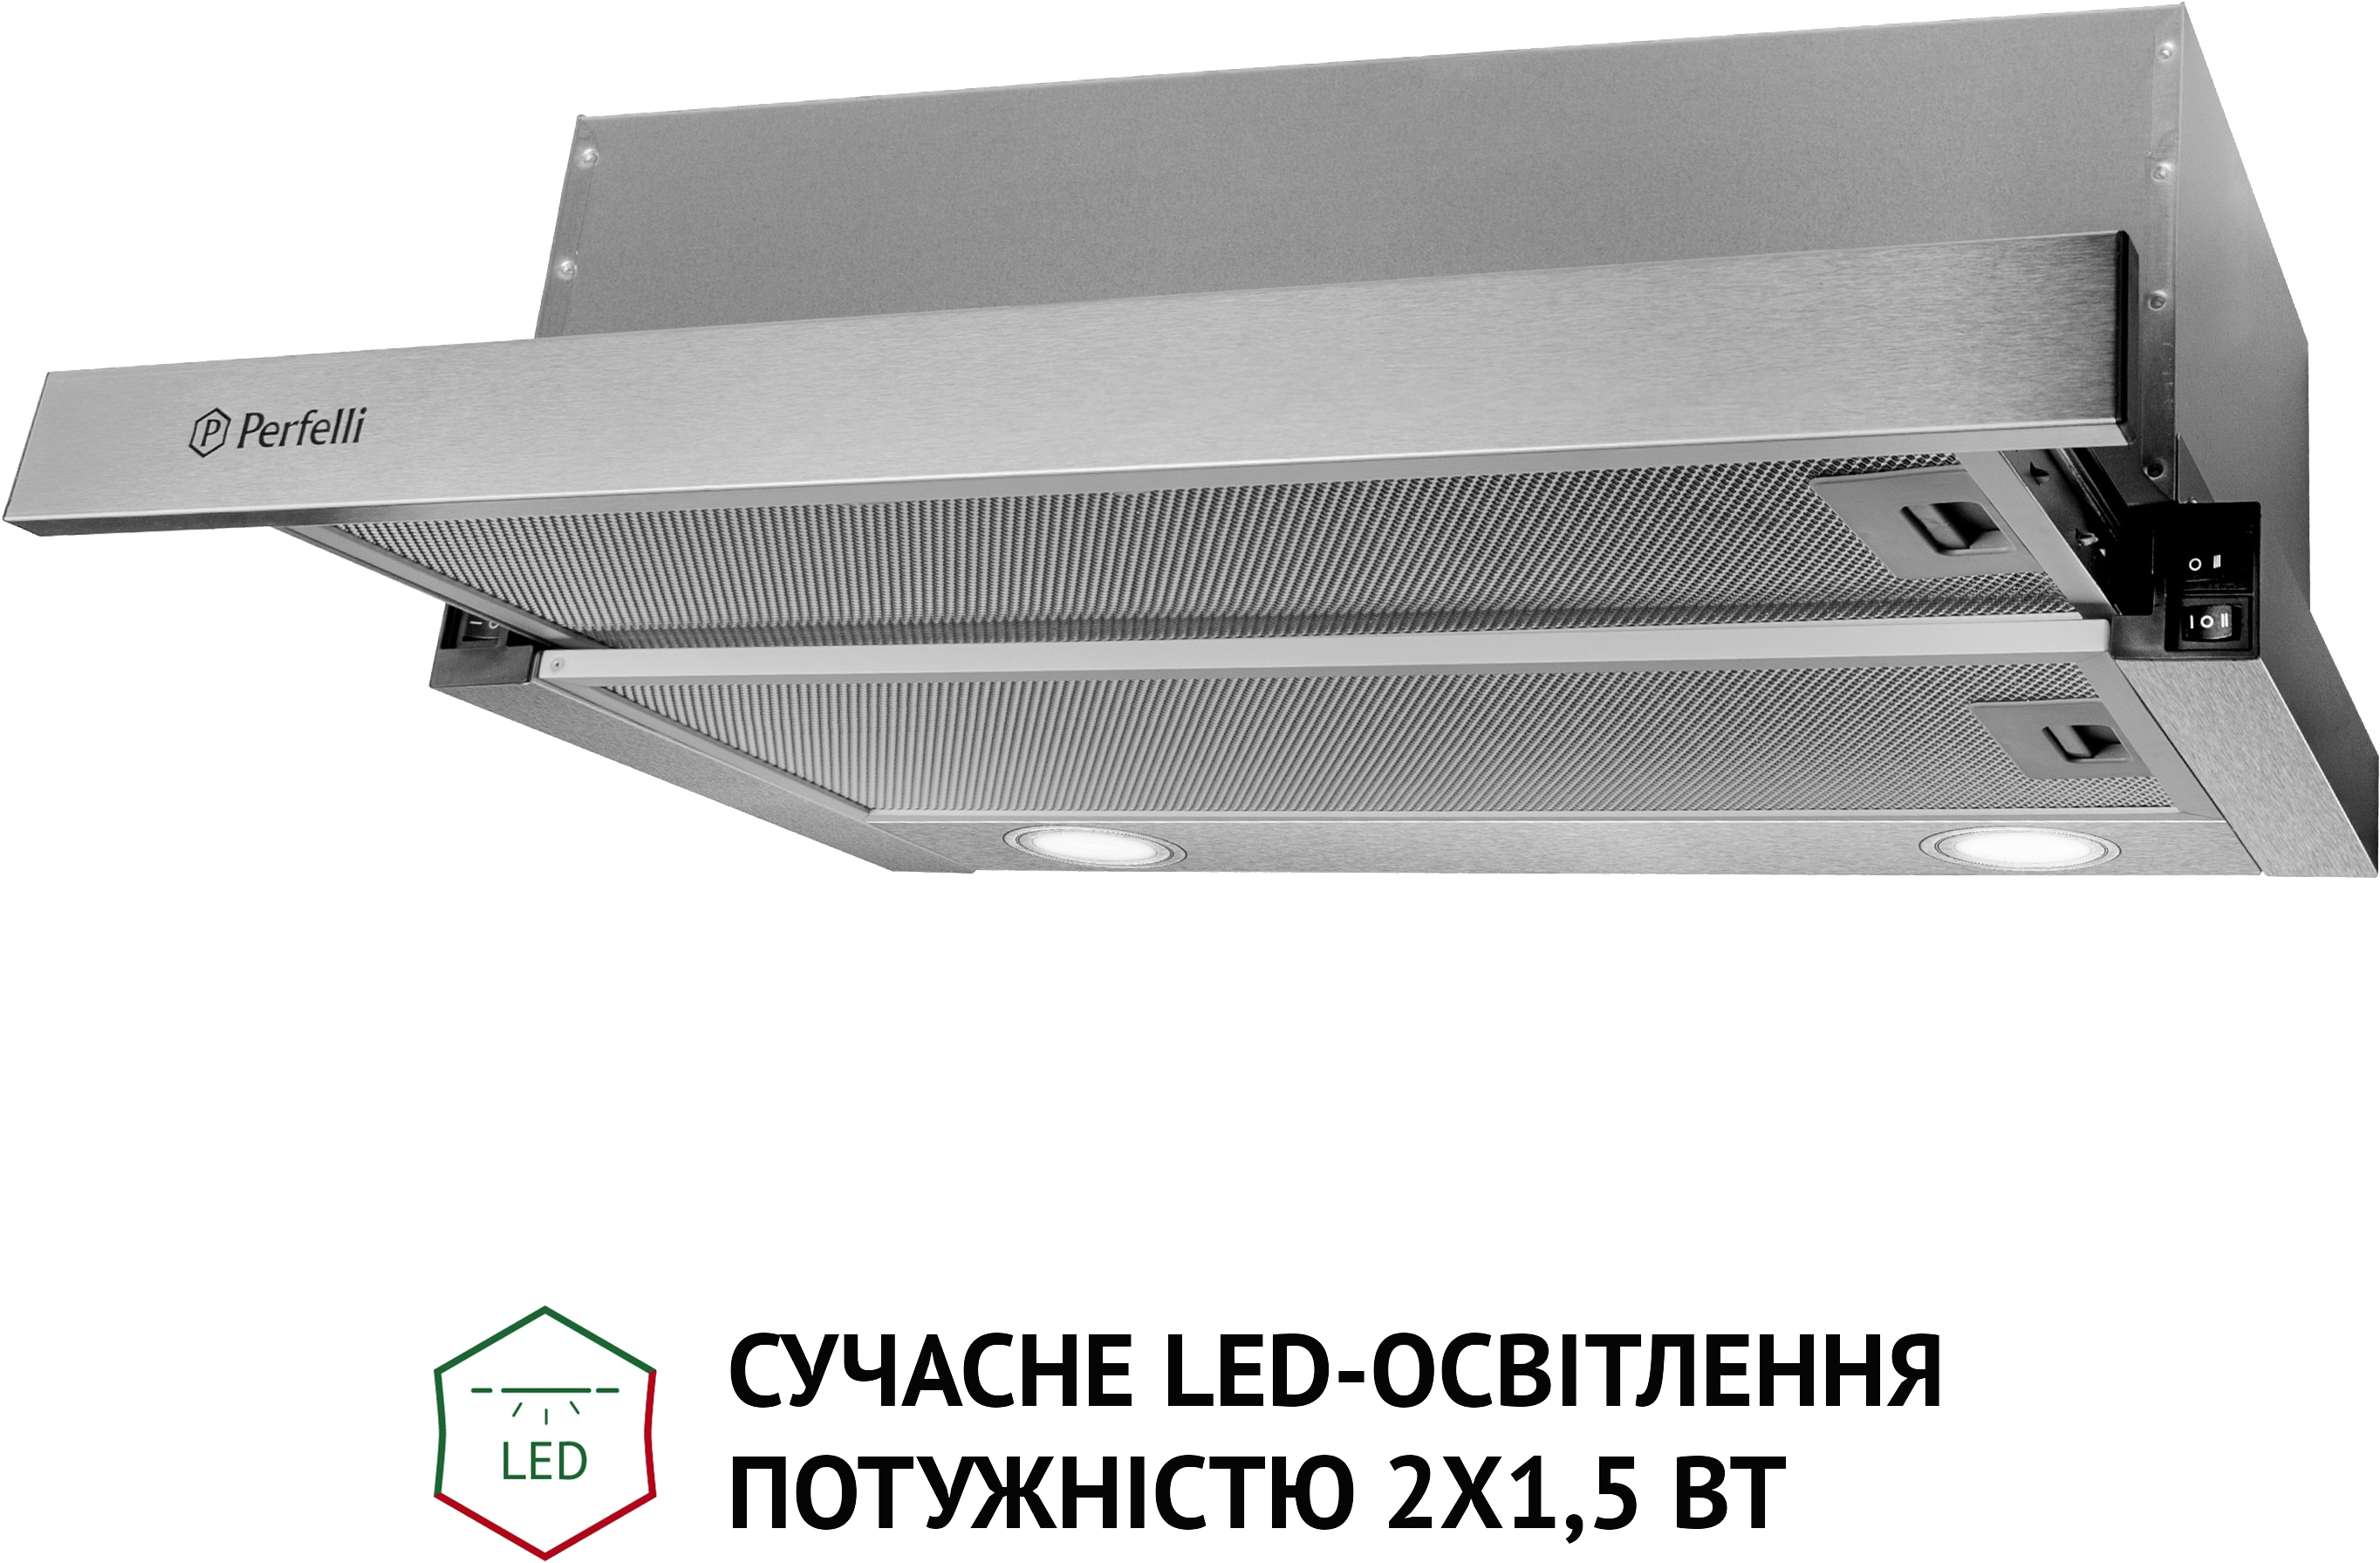 продаём Perfelli TL 6212 I 700 LED в Украине - фото 4